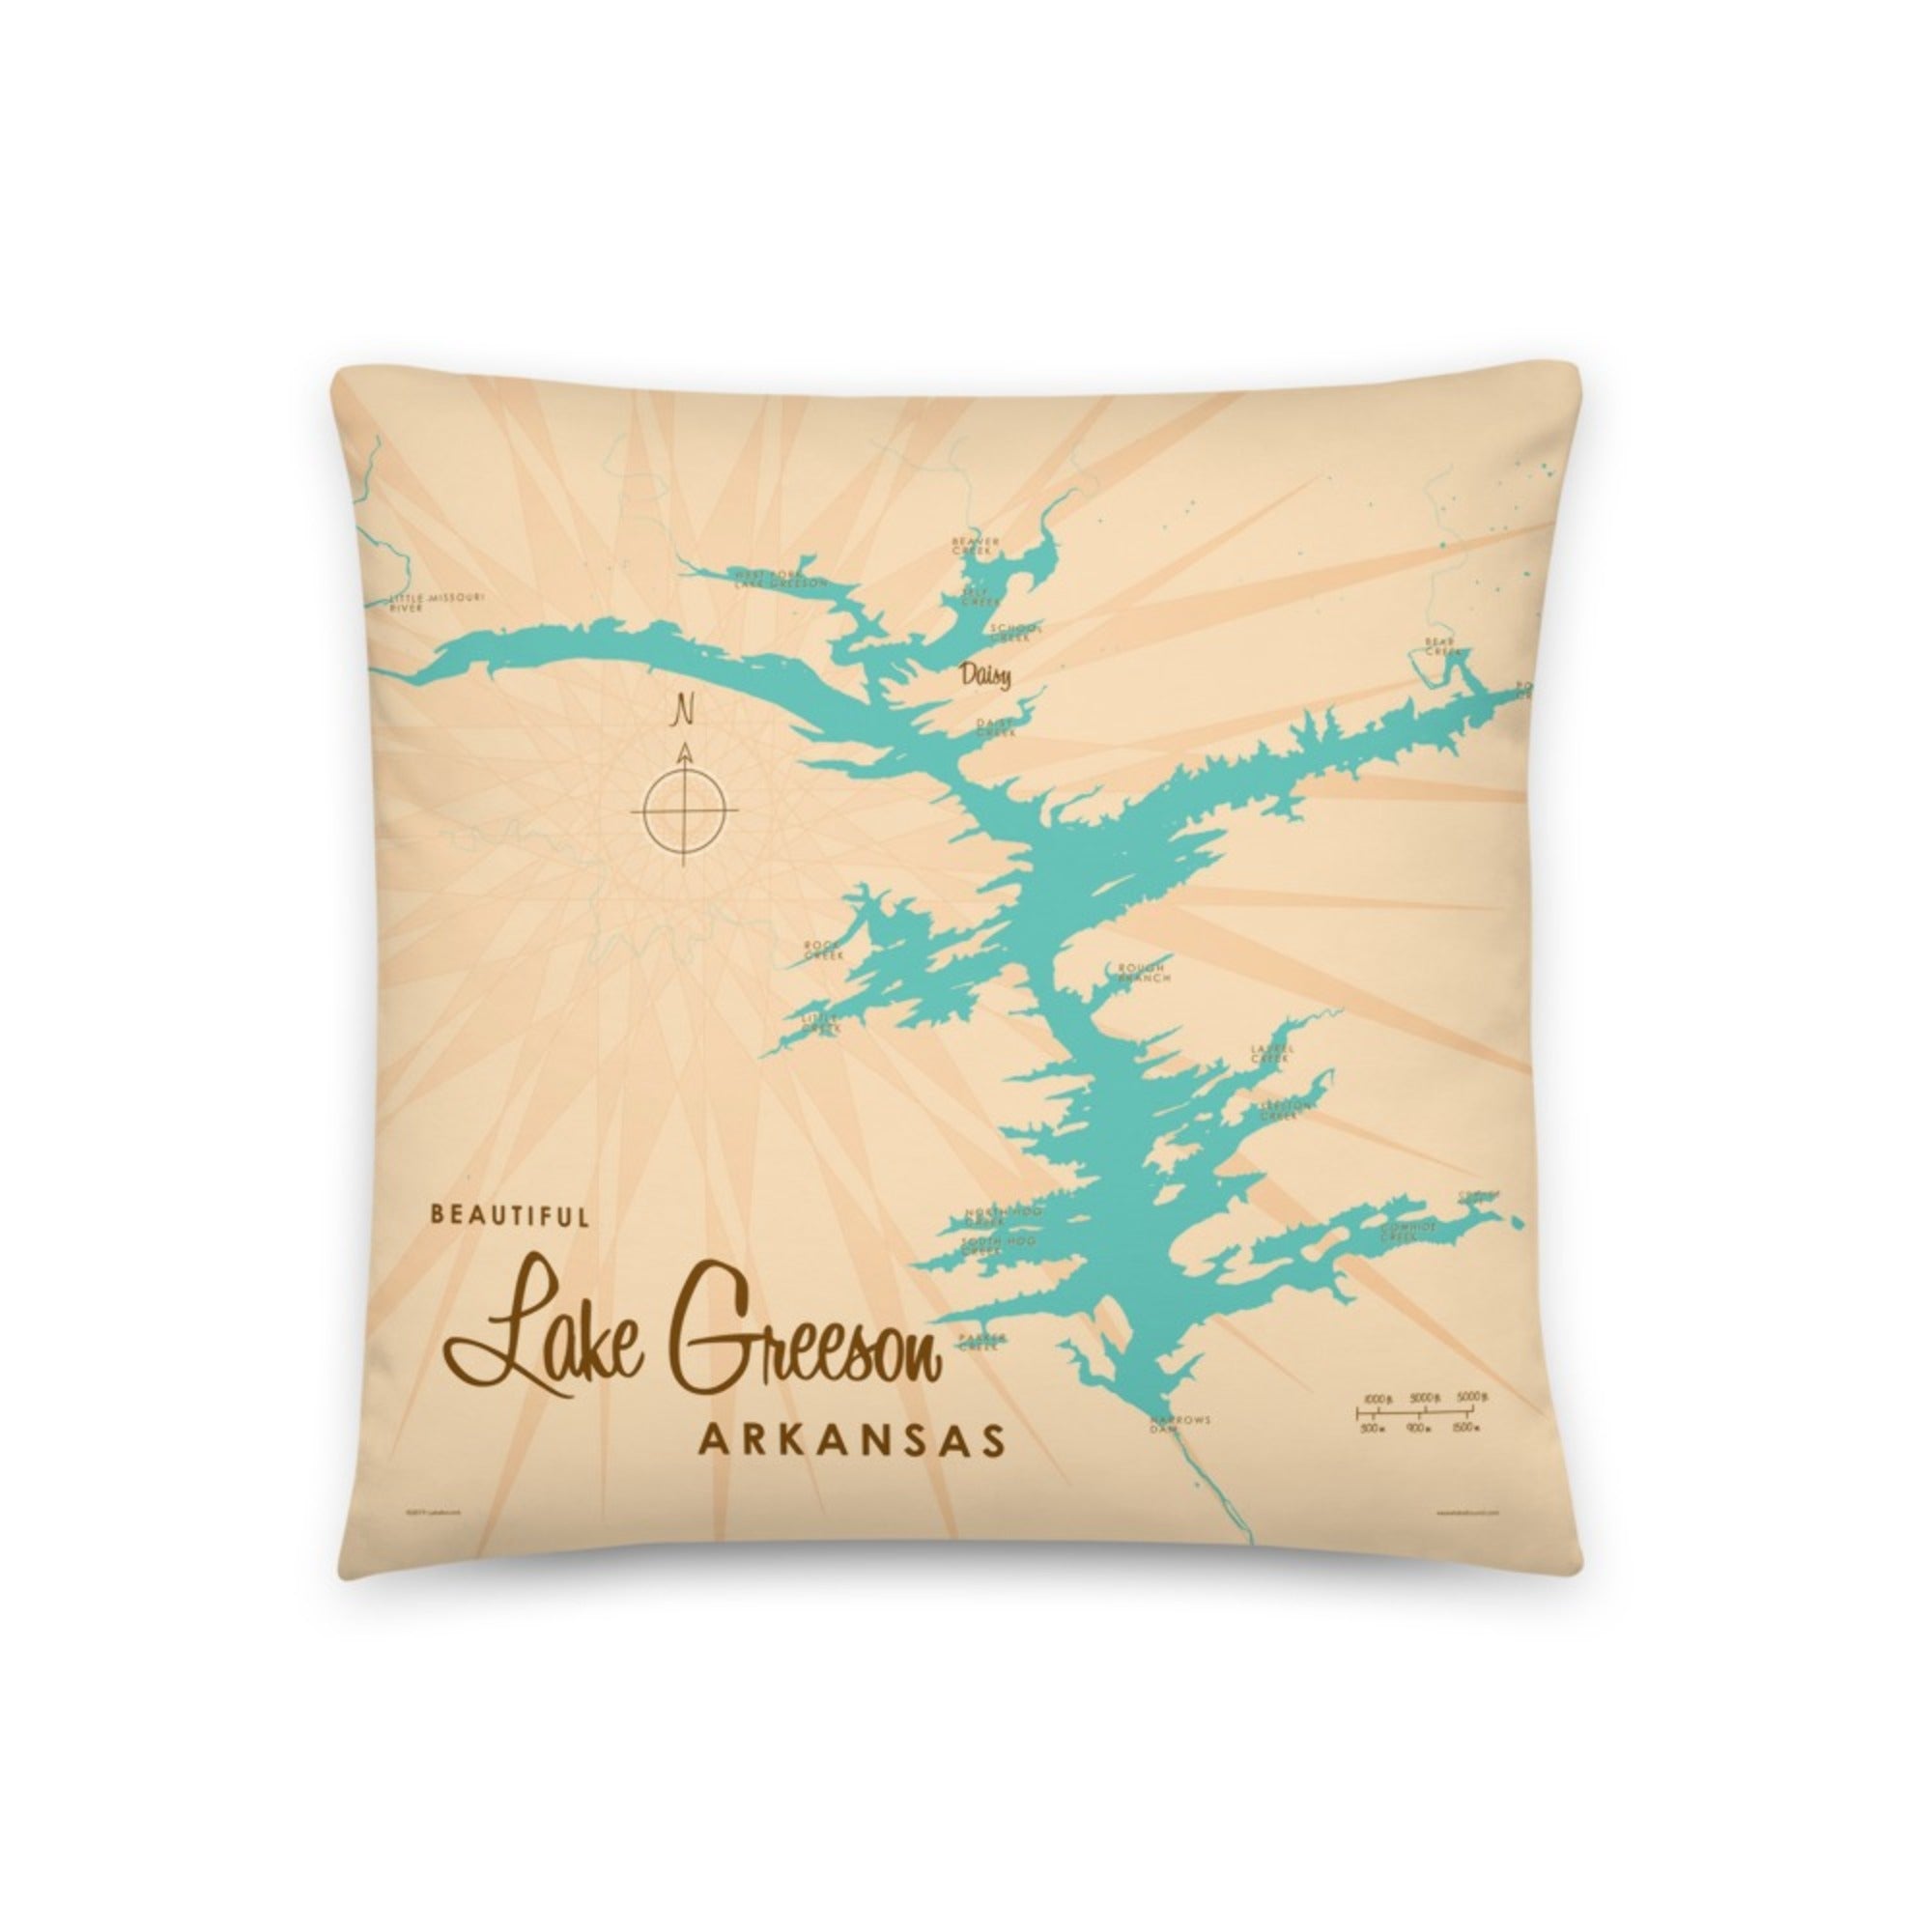 Lake Greeson Arkansas Pillow